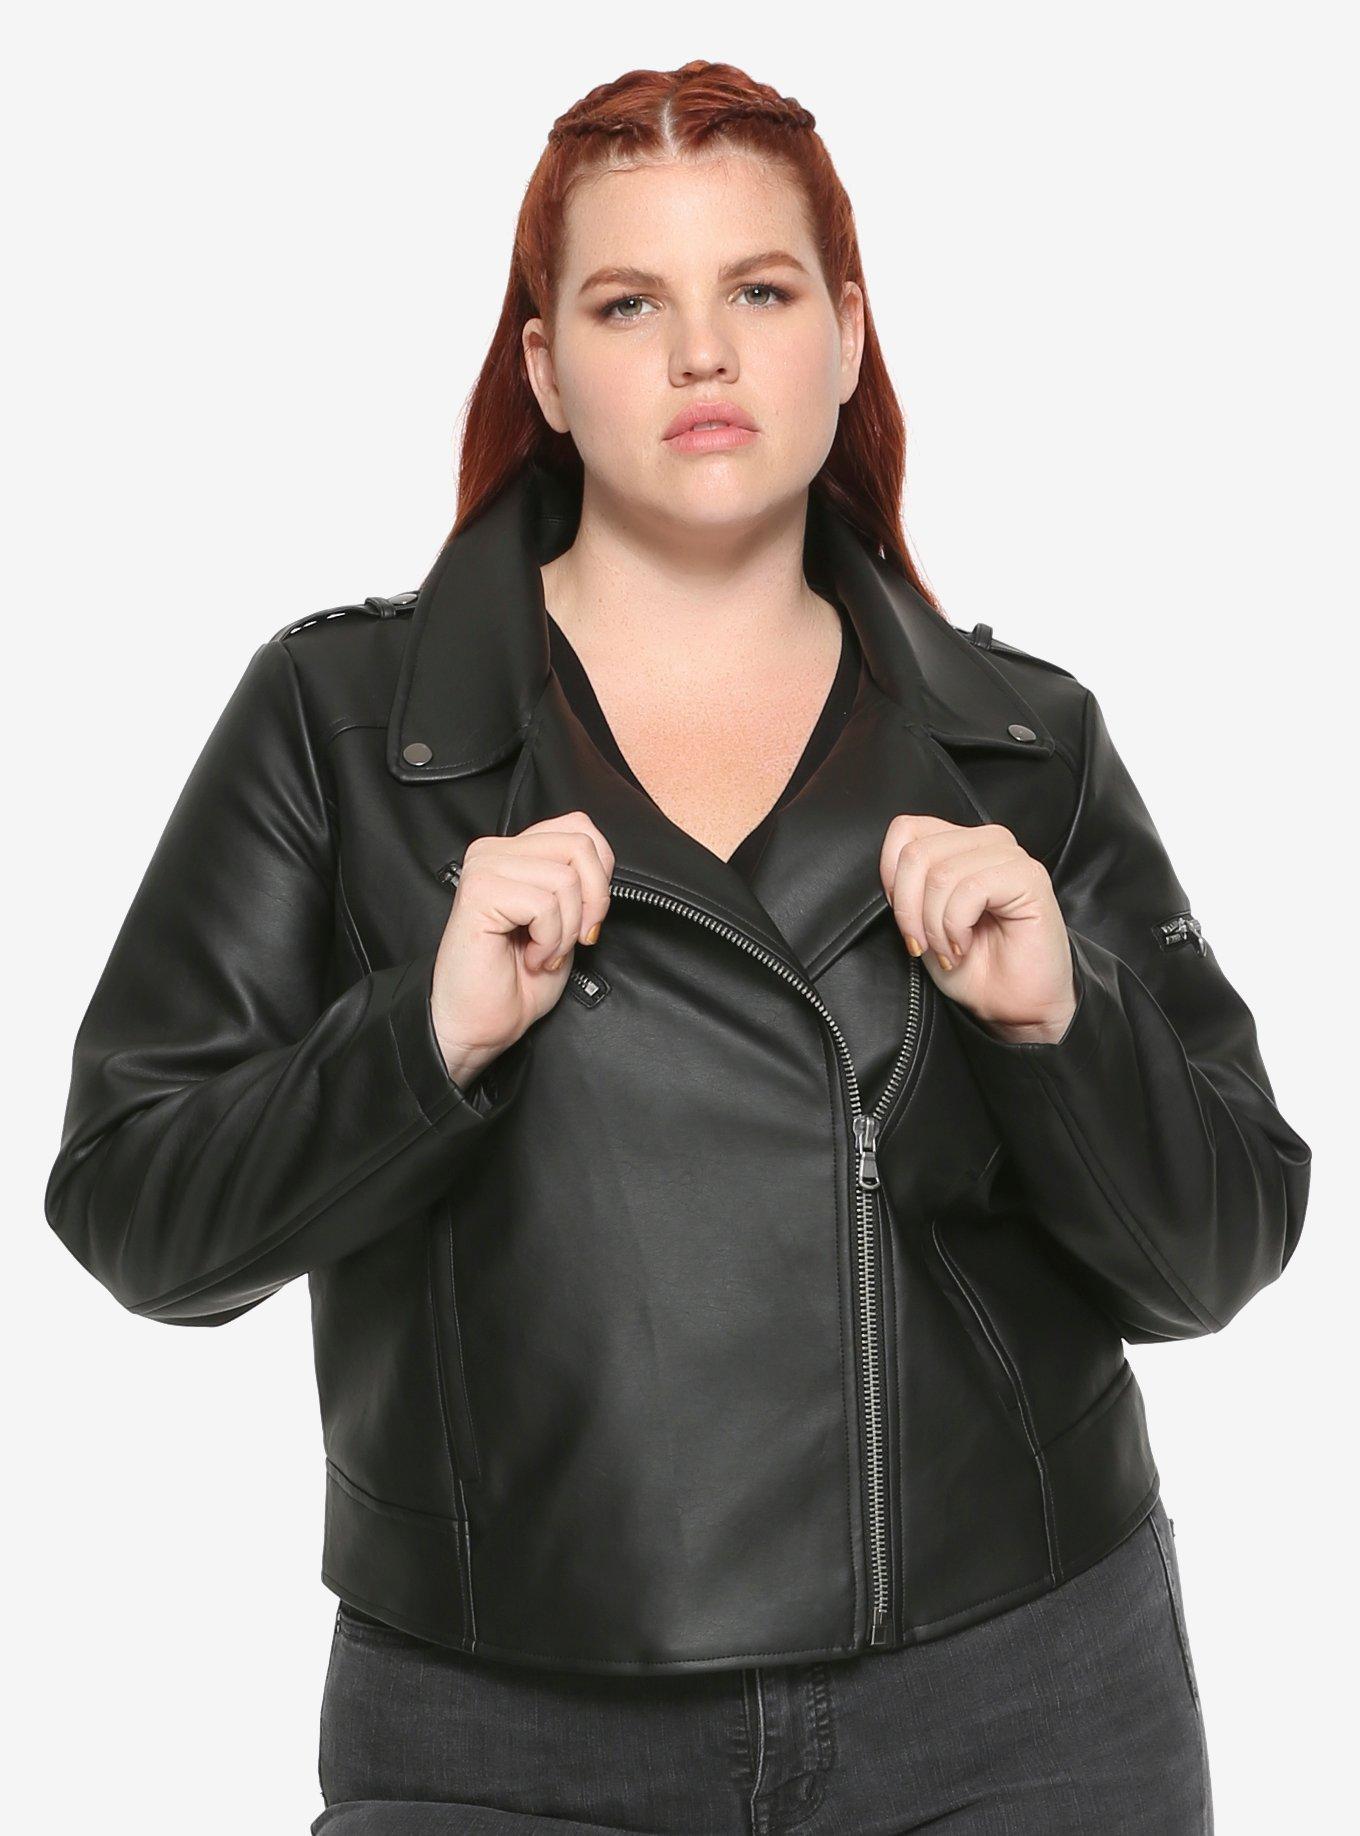 Riverdale Southside Serpents Faux Leather Girls Jacket Plus Size Hot Topic Exclusive, BLACK, alternate